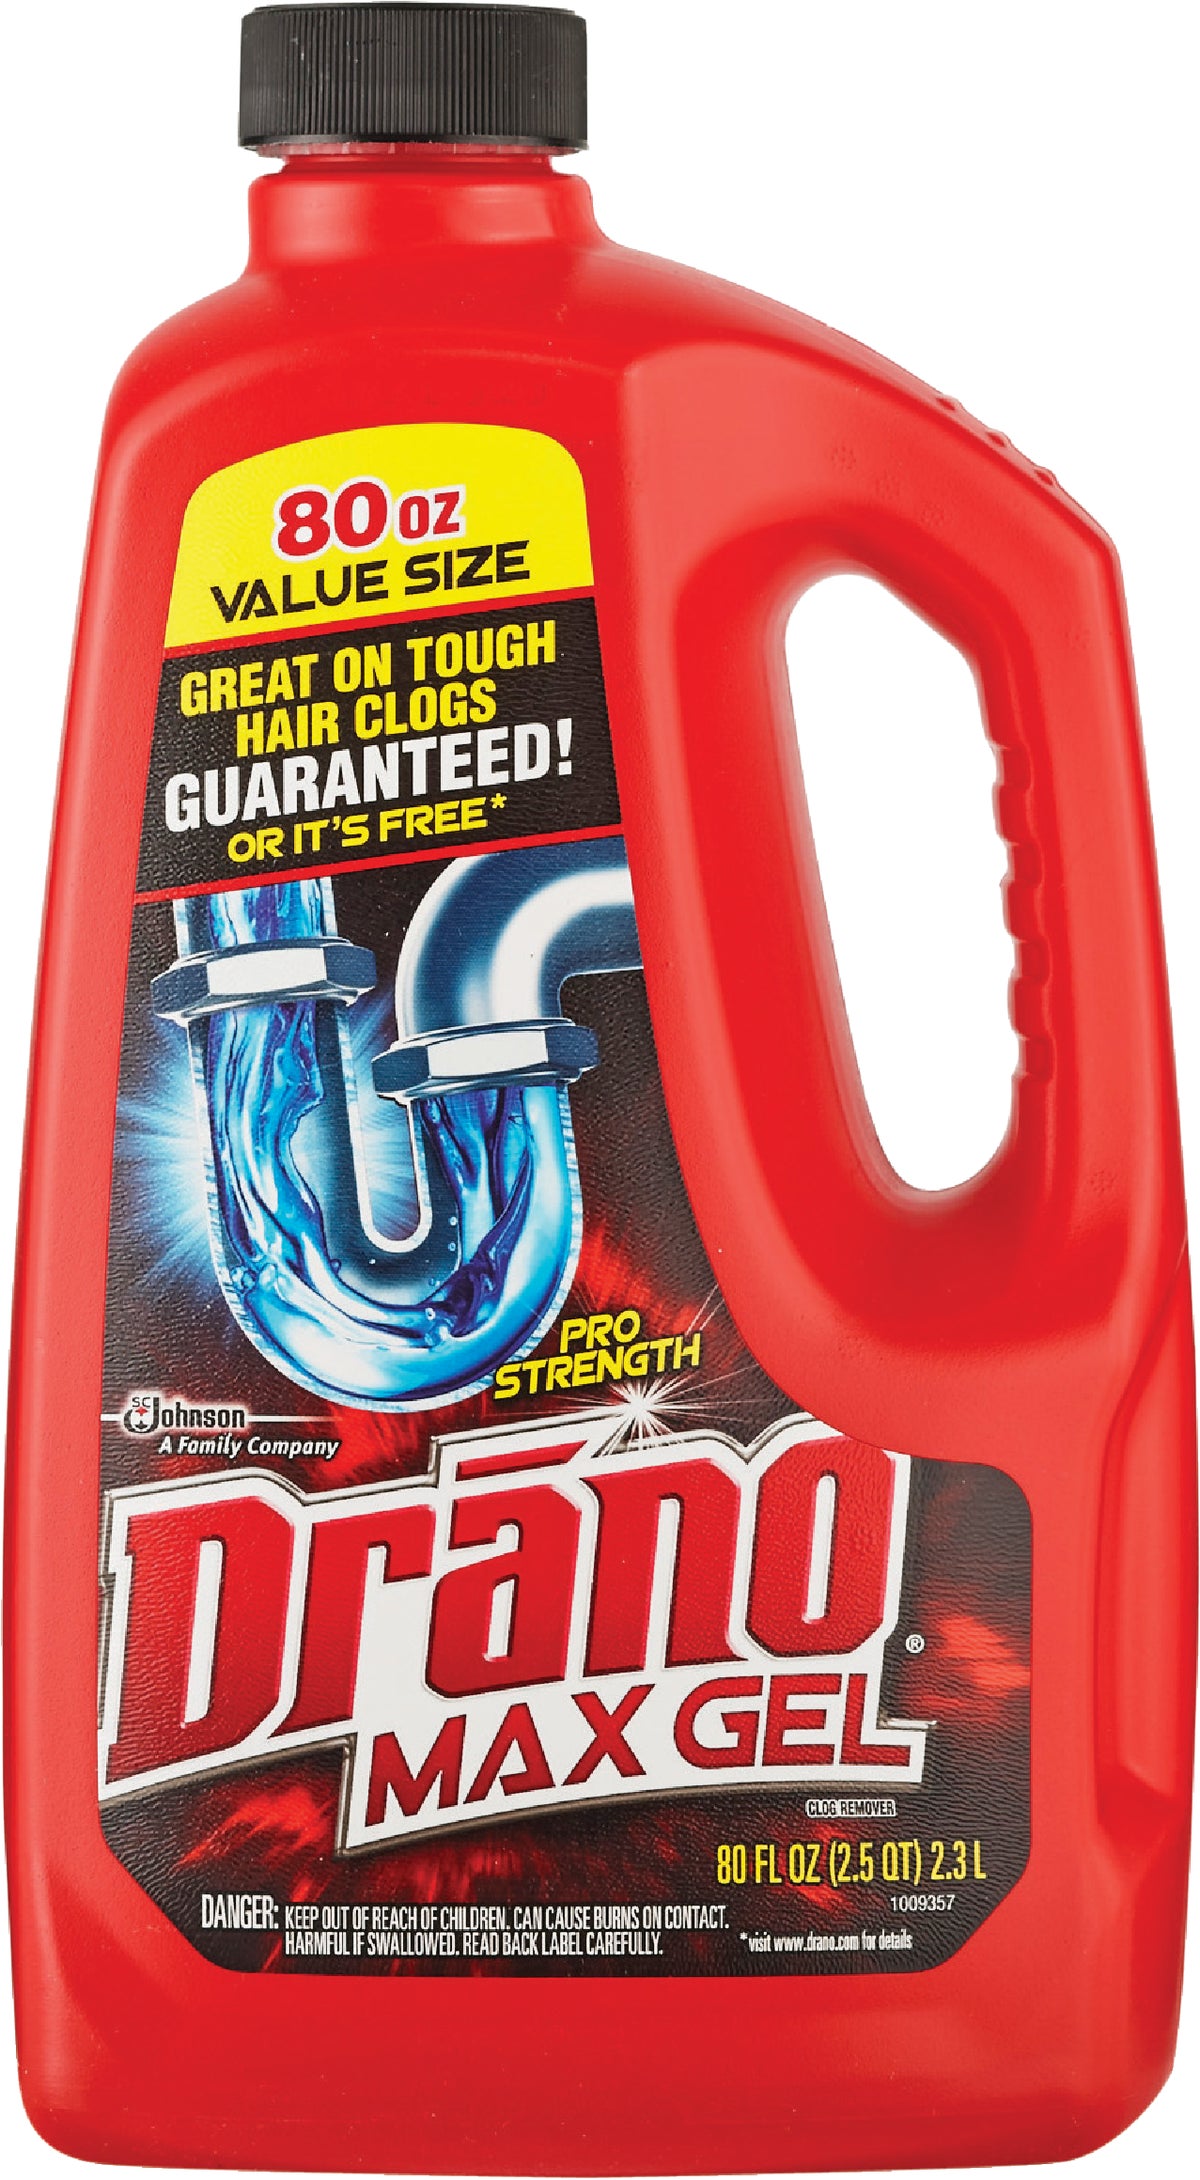 Drano Max Clog Remover, 42 oz Bottle, Natural Gel